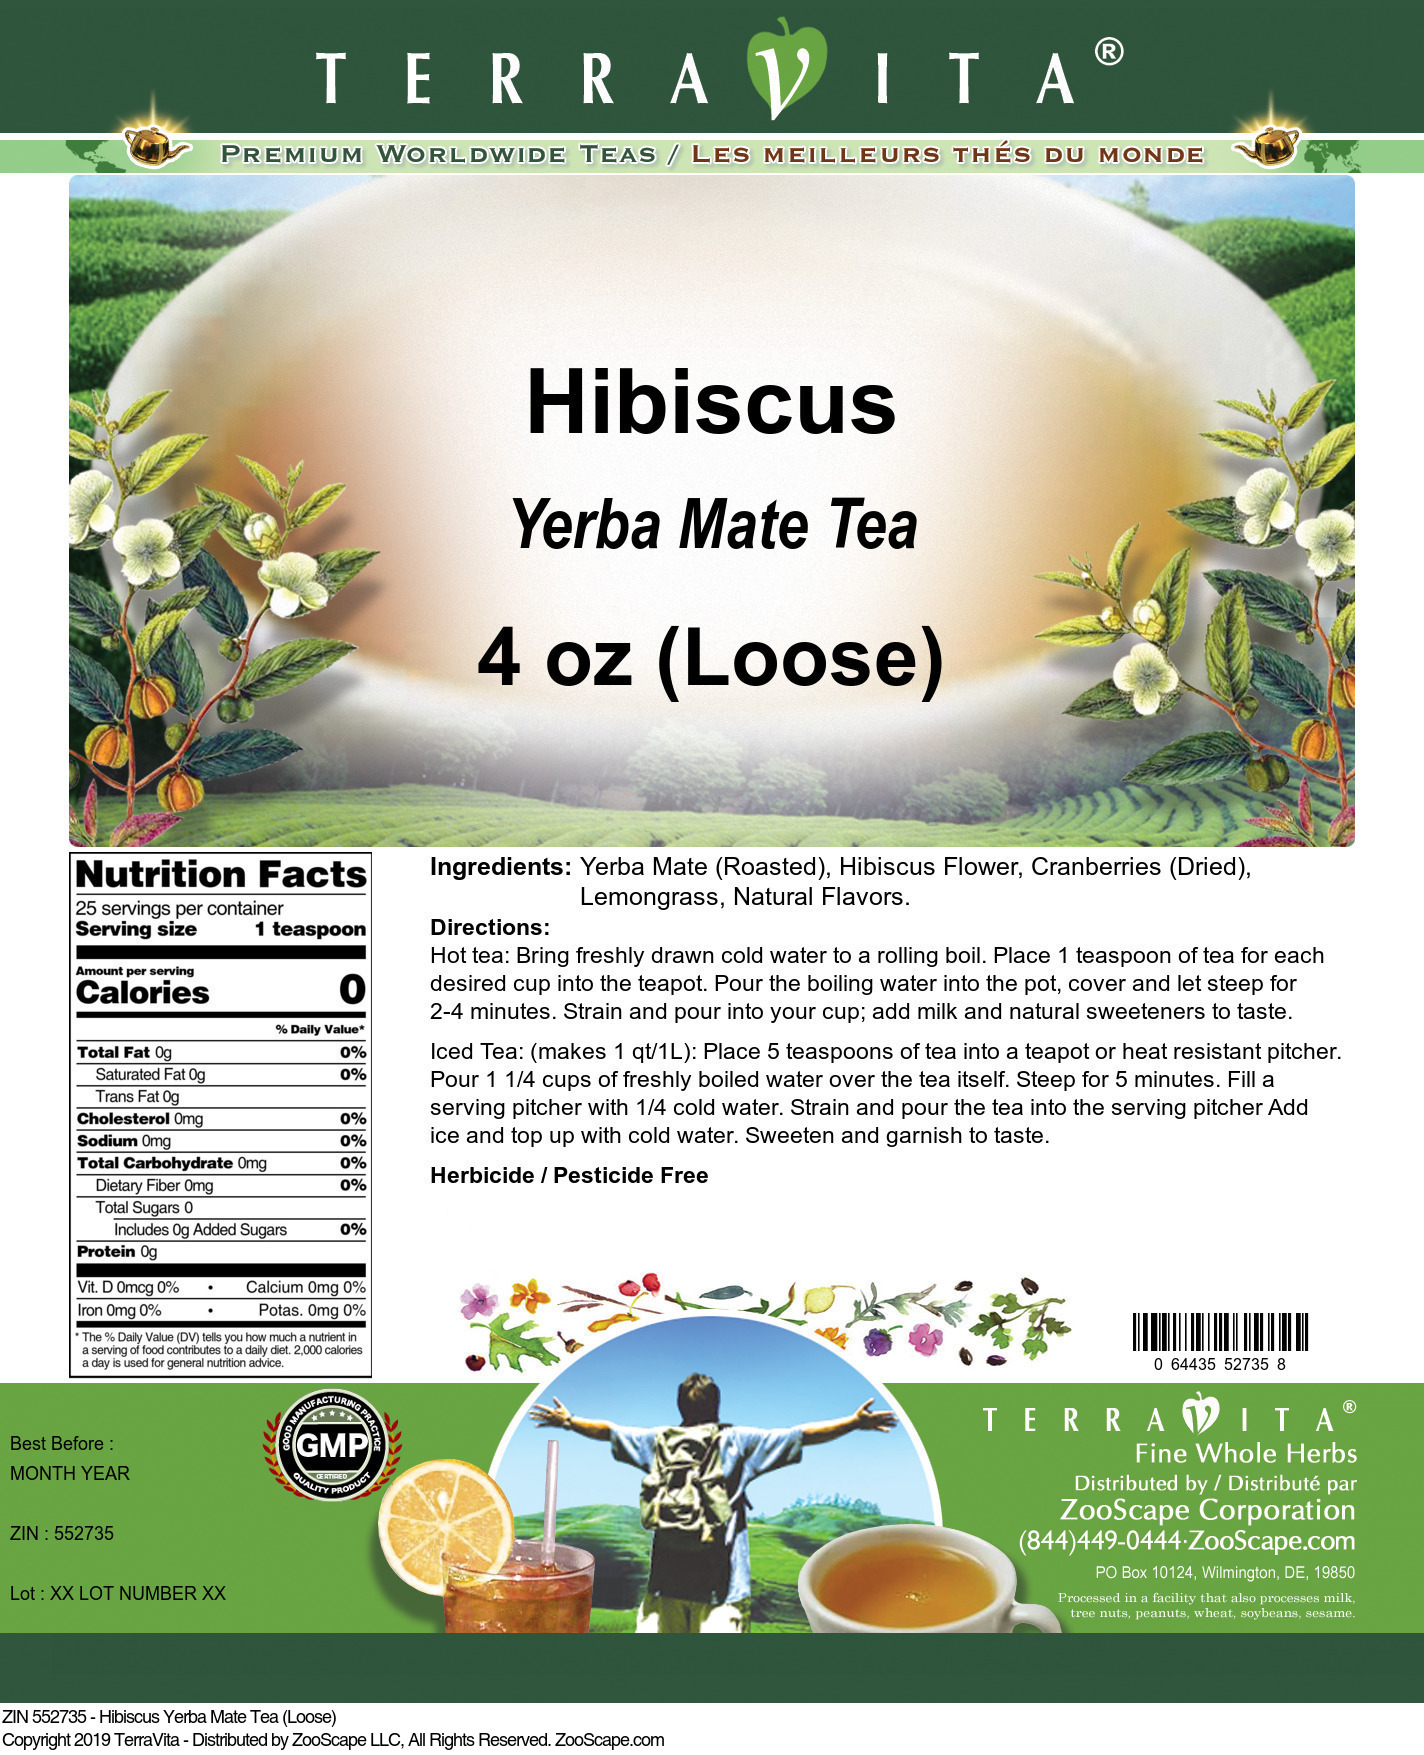 Hibiscus Yerba Mate Tea (Loose) - Label